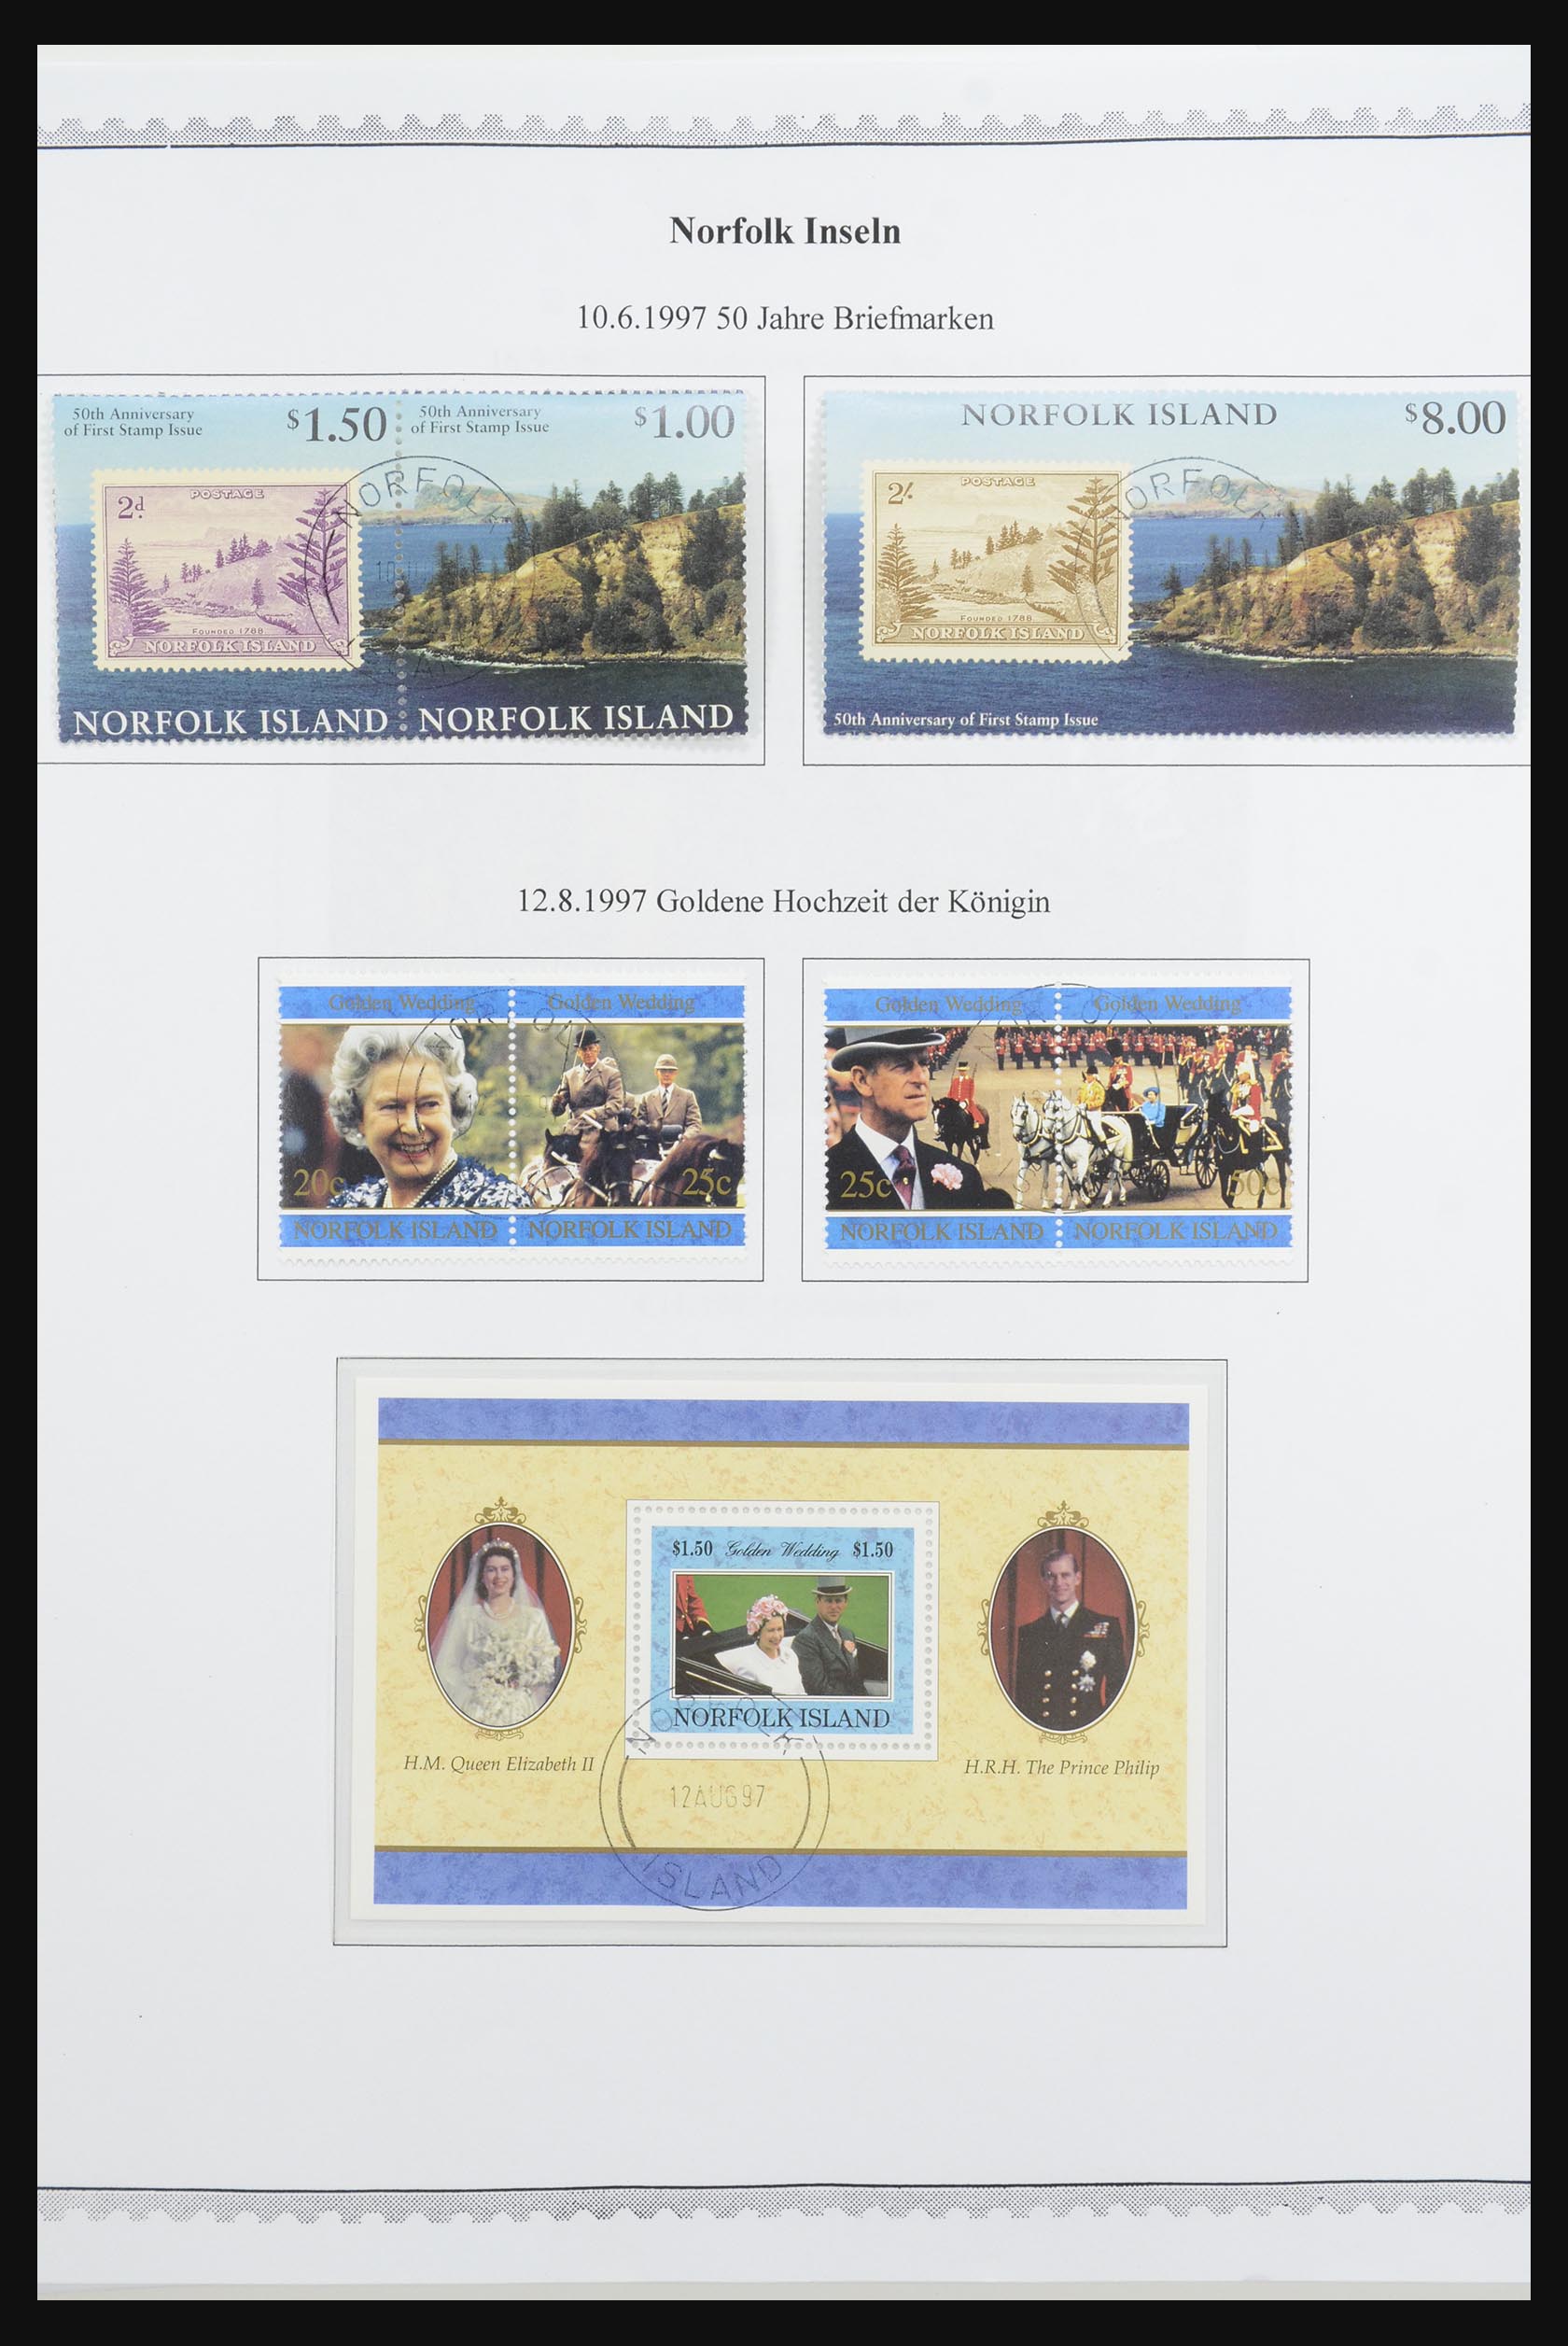 31858 063 - 31858 Norfolk Islands 1947-2000.